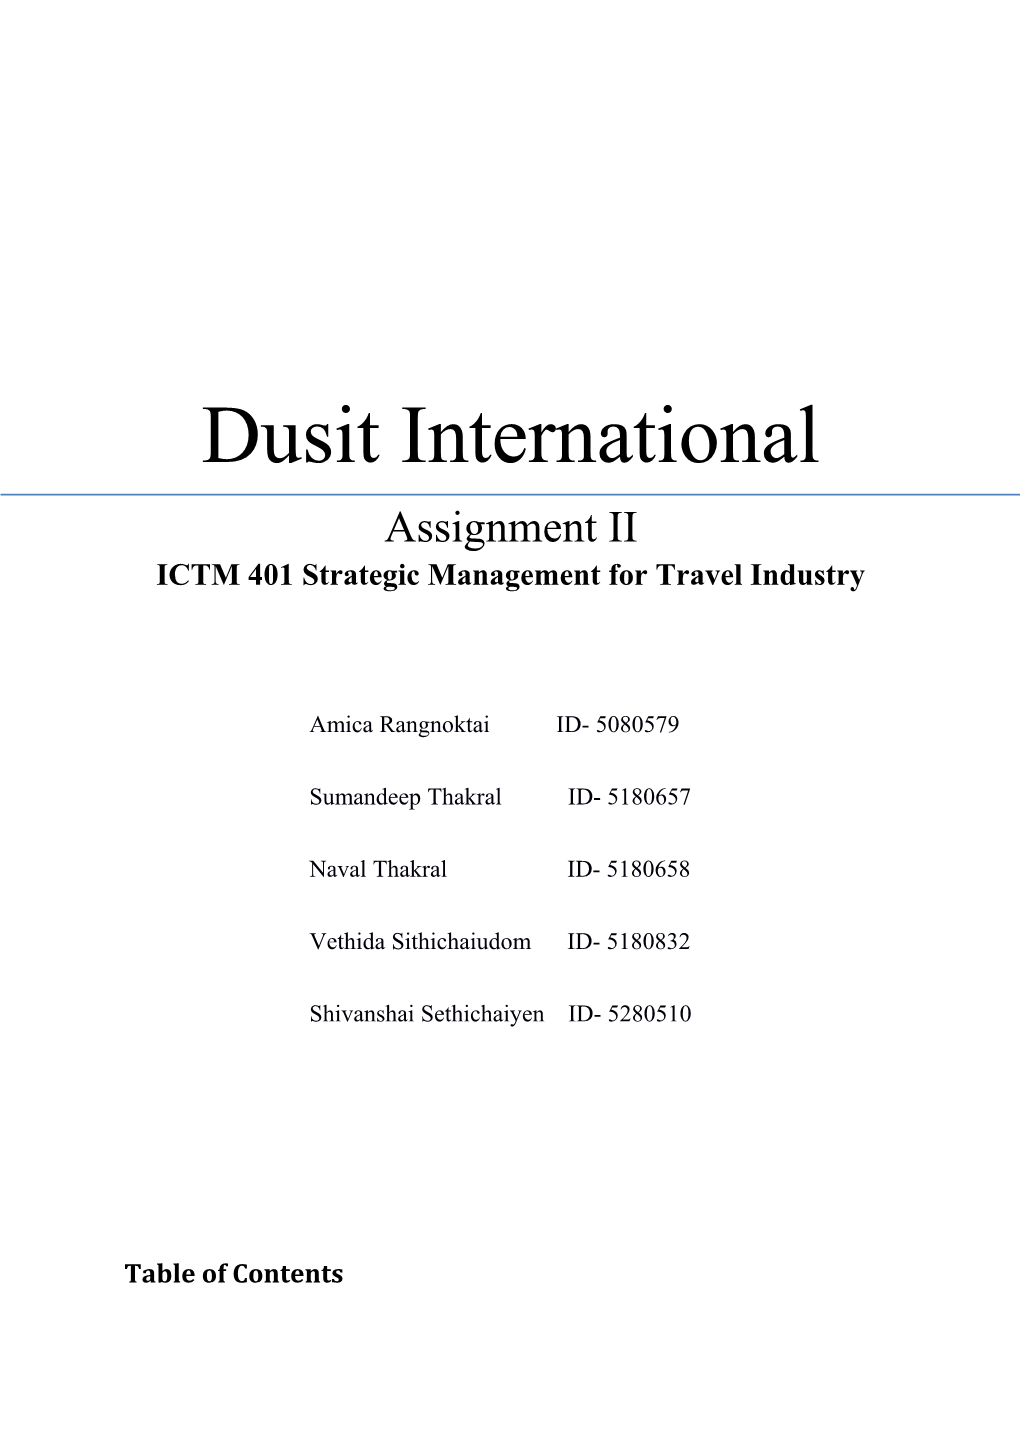 ICTM 401 Strategic Management for Travel Industry